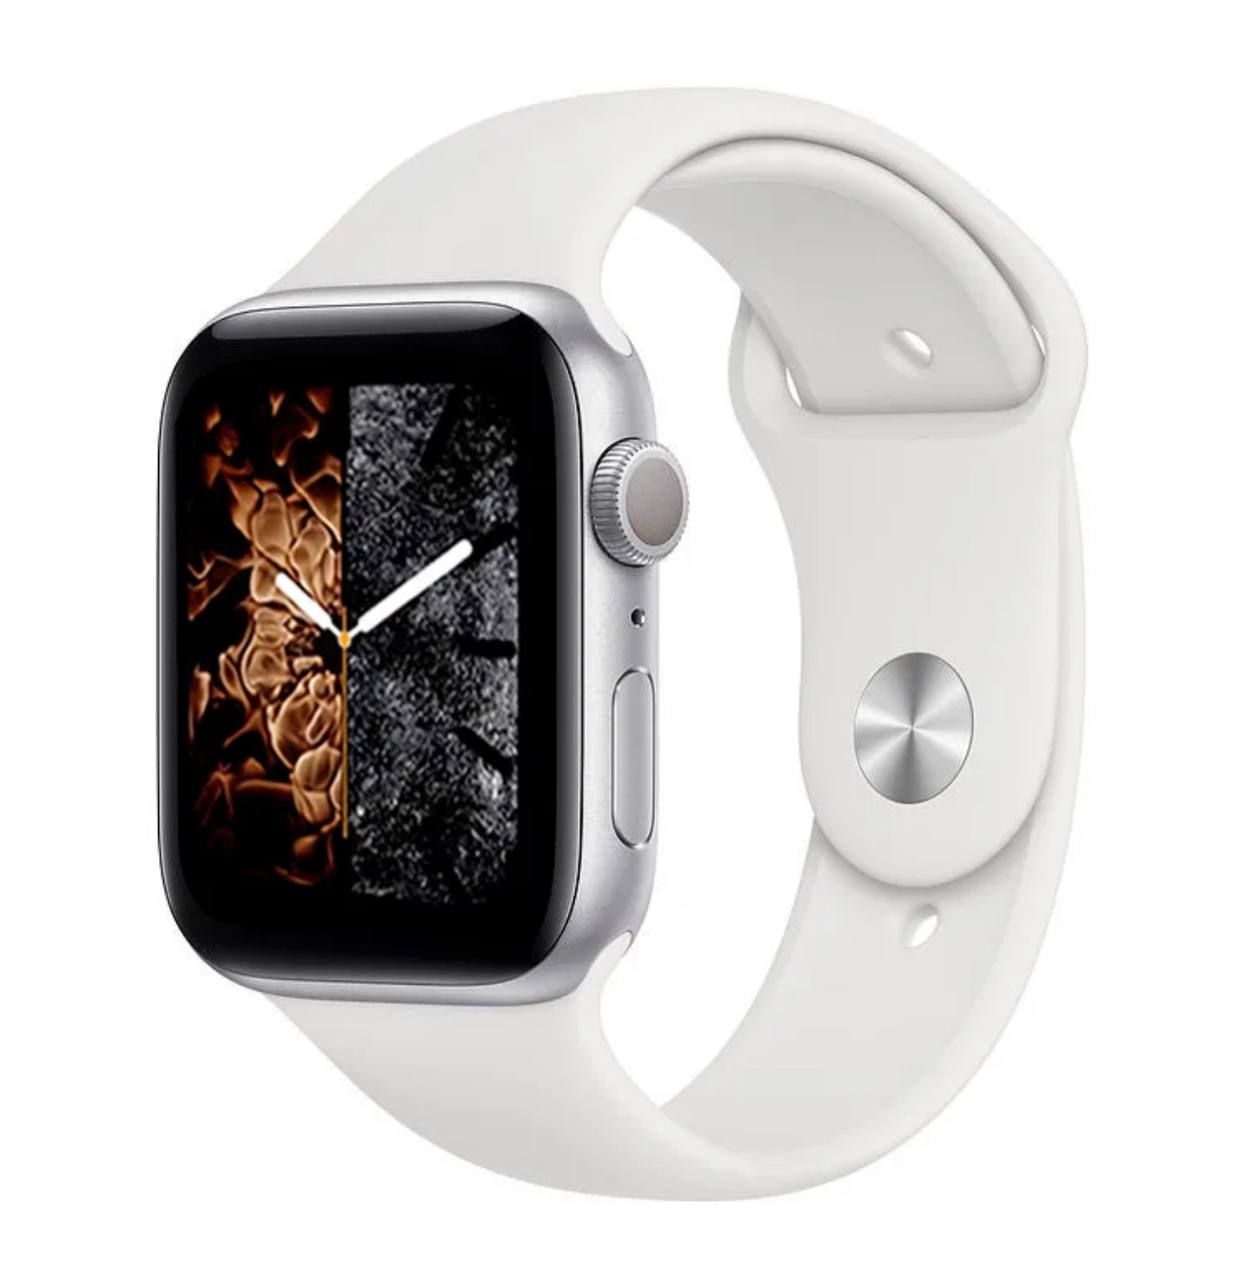 Apple watch 2 dicks